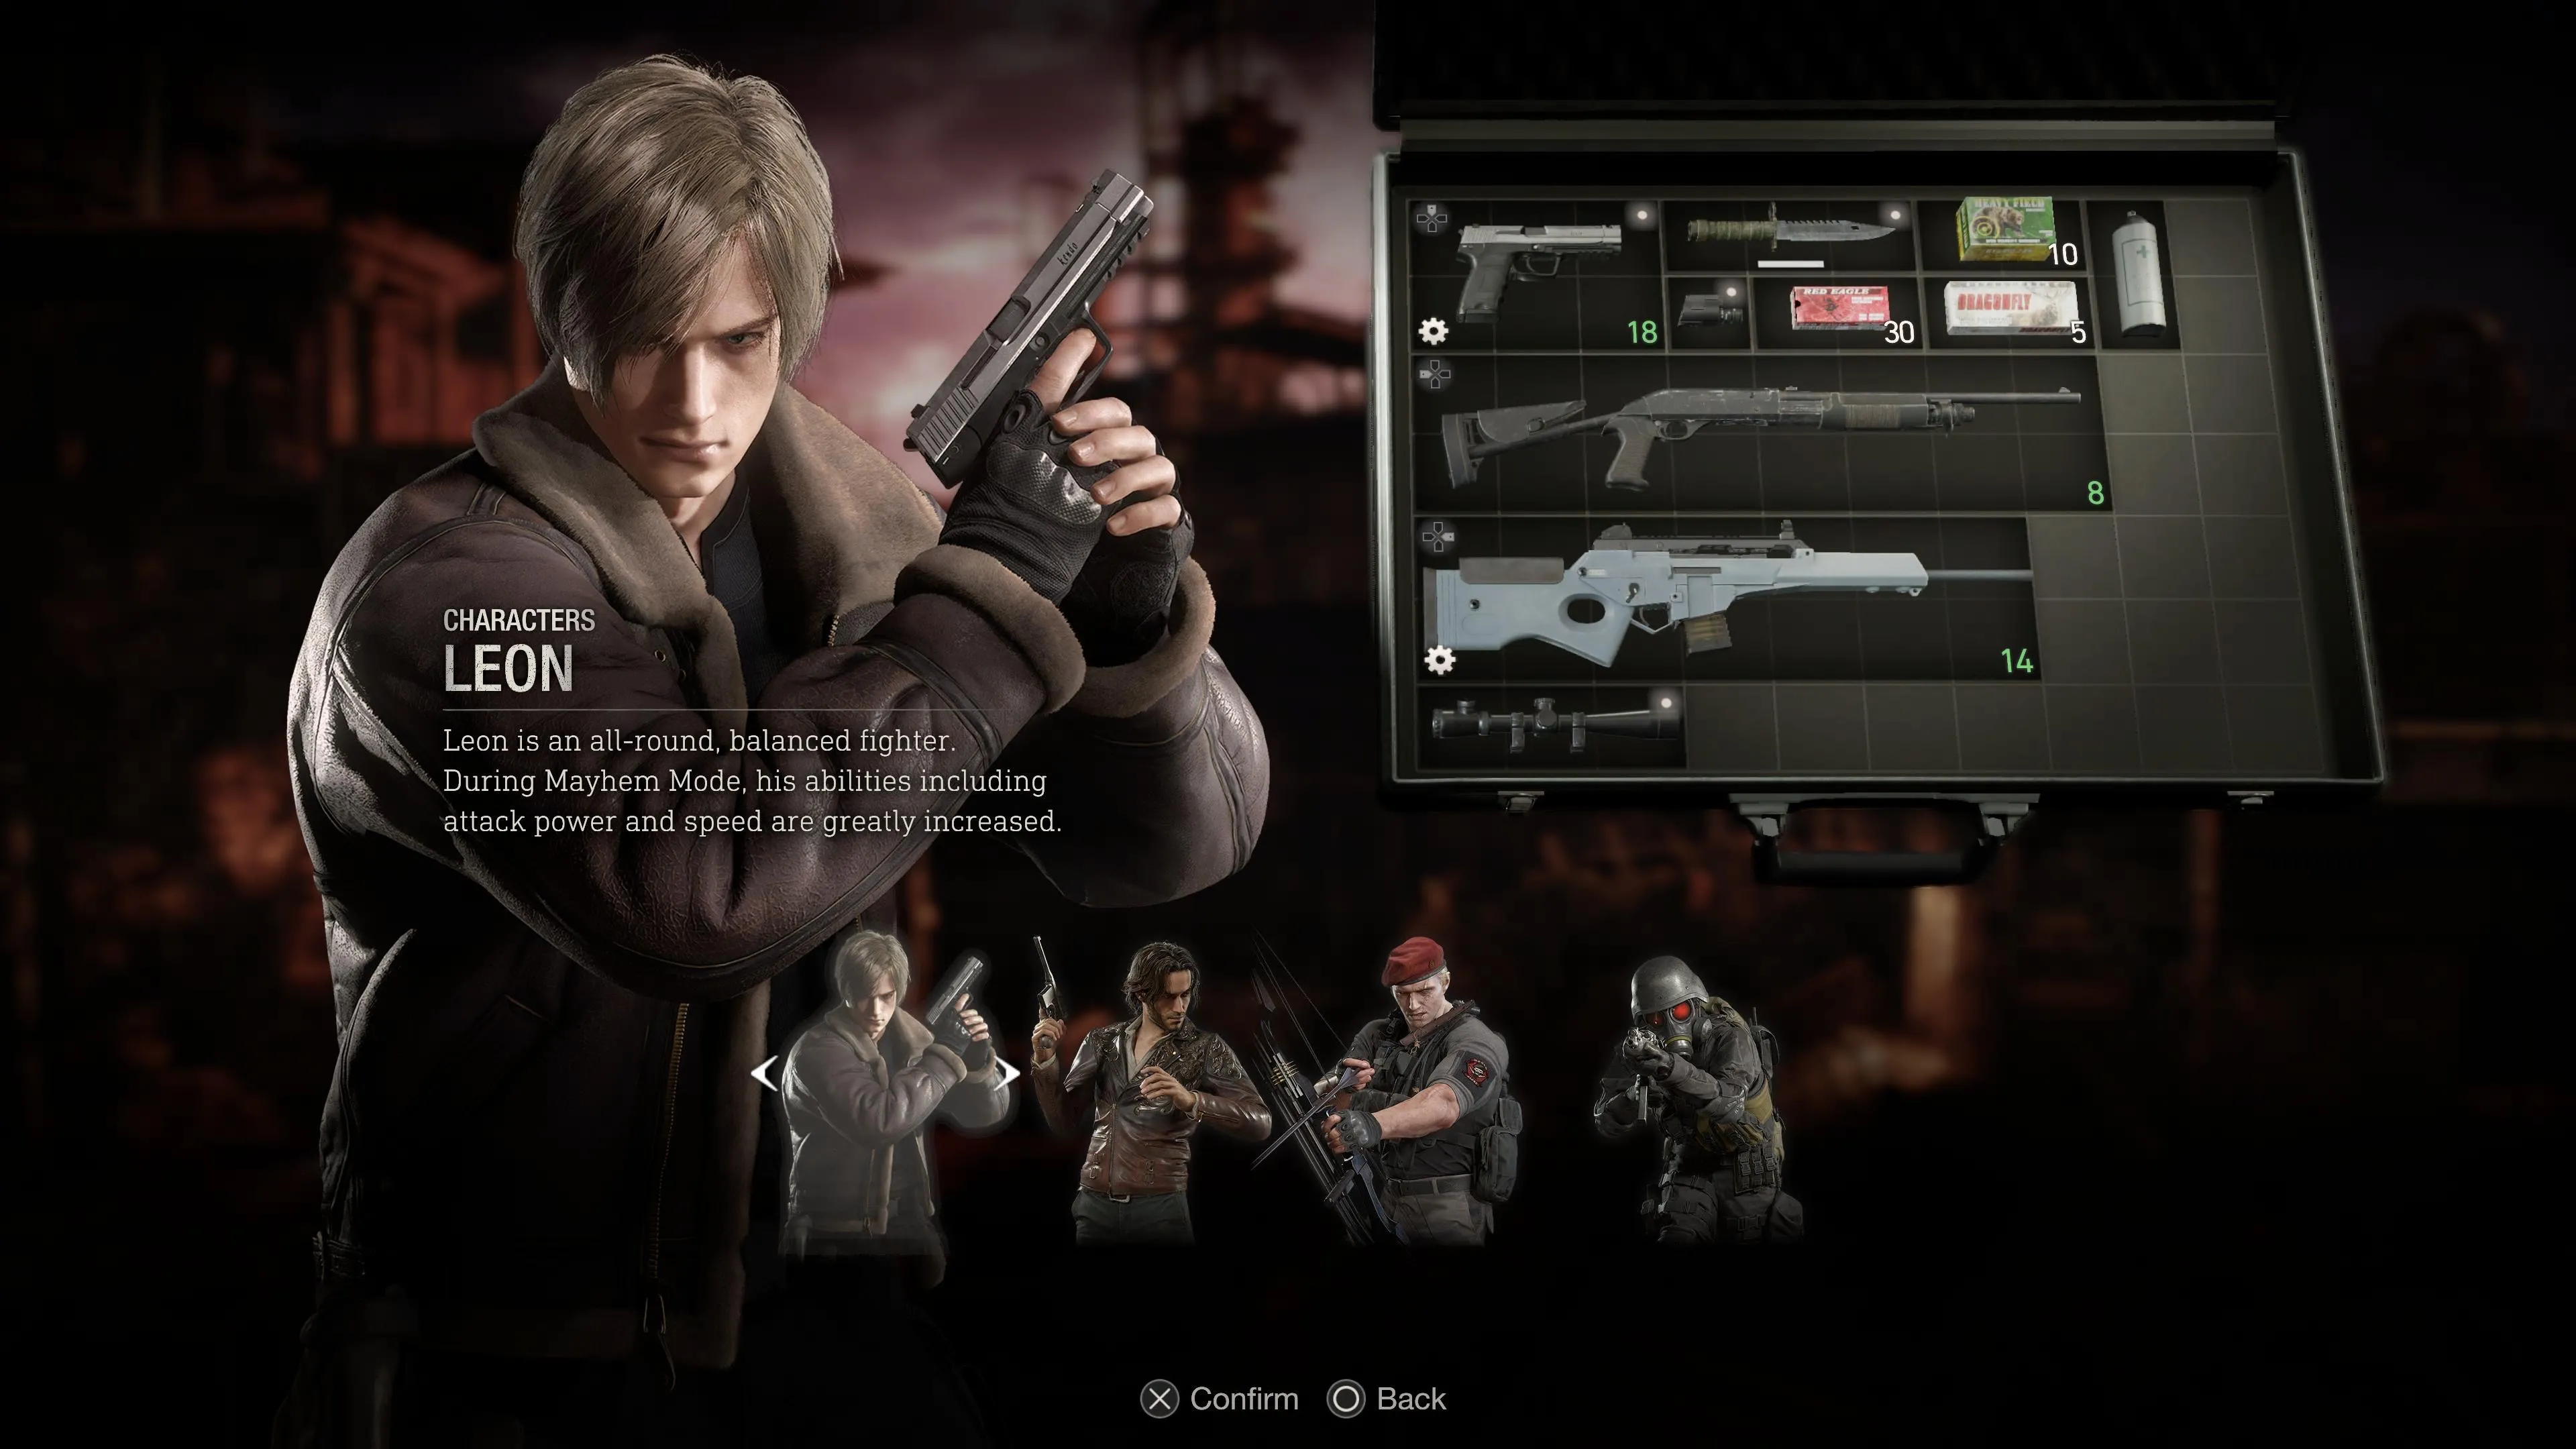 Resident Evil 4 Remake Mercenaries Unlocks: How to Get Krauser